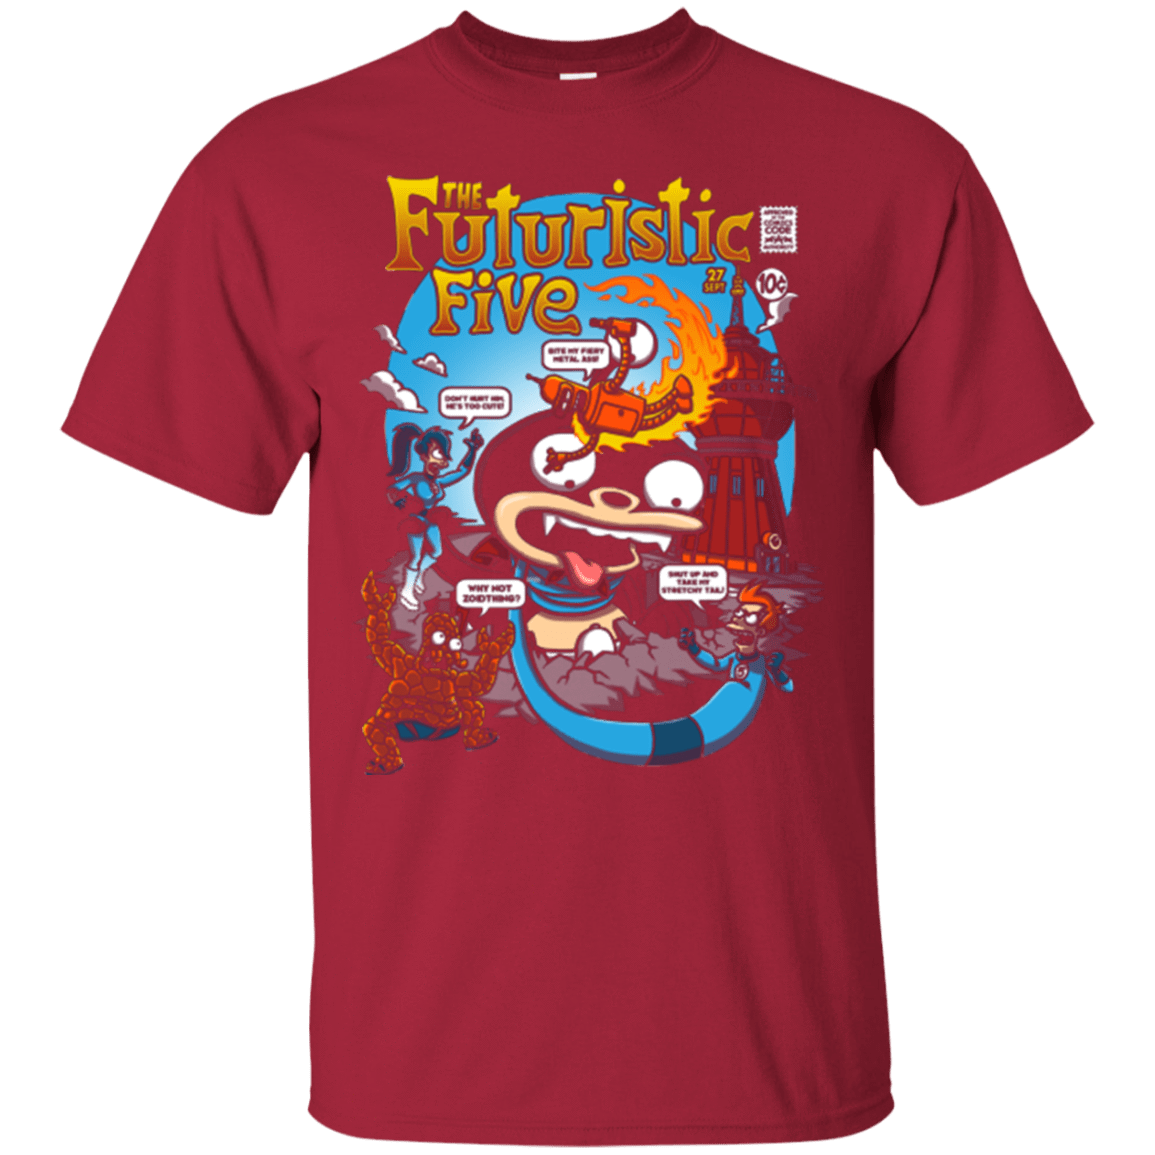 T-Shirts Cardinal / S Futurama Fantastic 4 T-Shirt